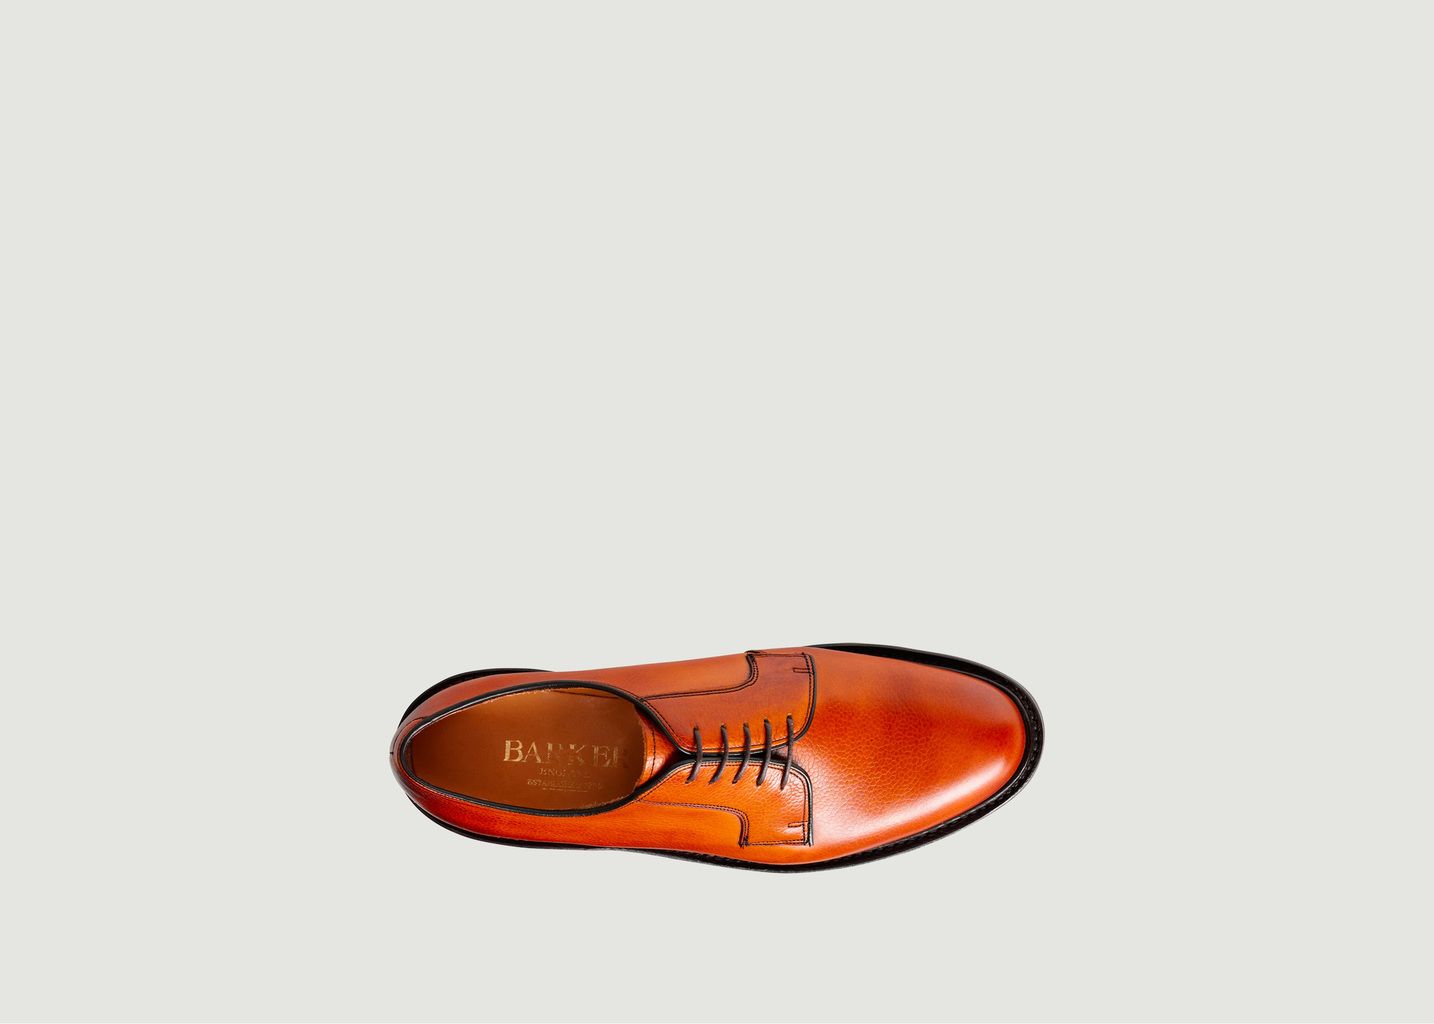 Nairn Derbies - Barker Shoes